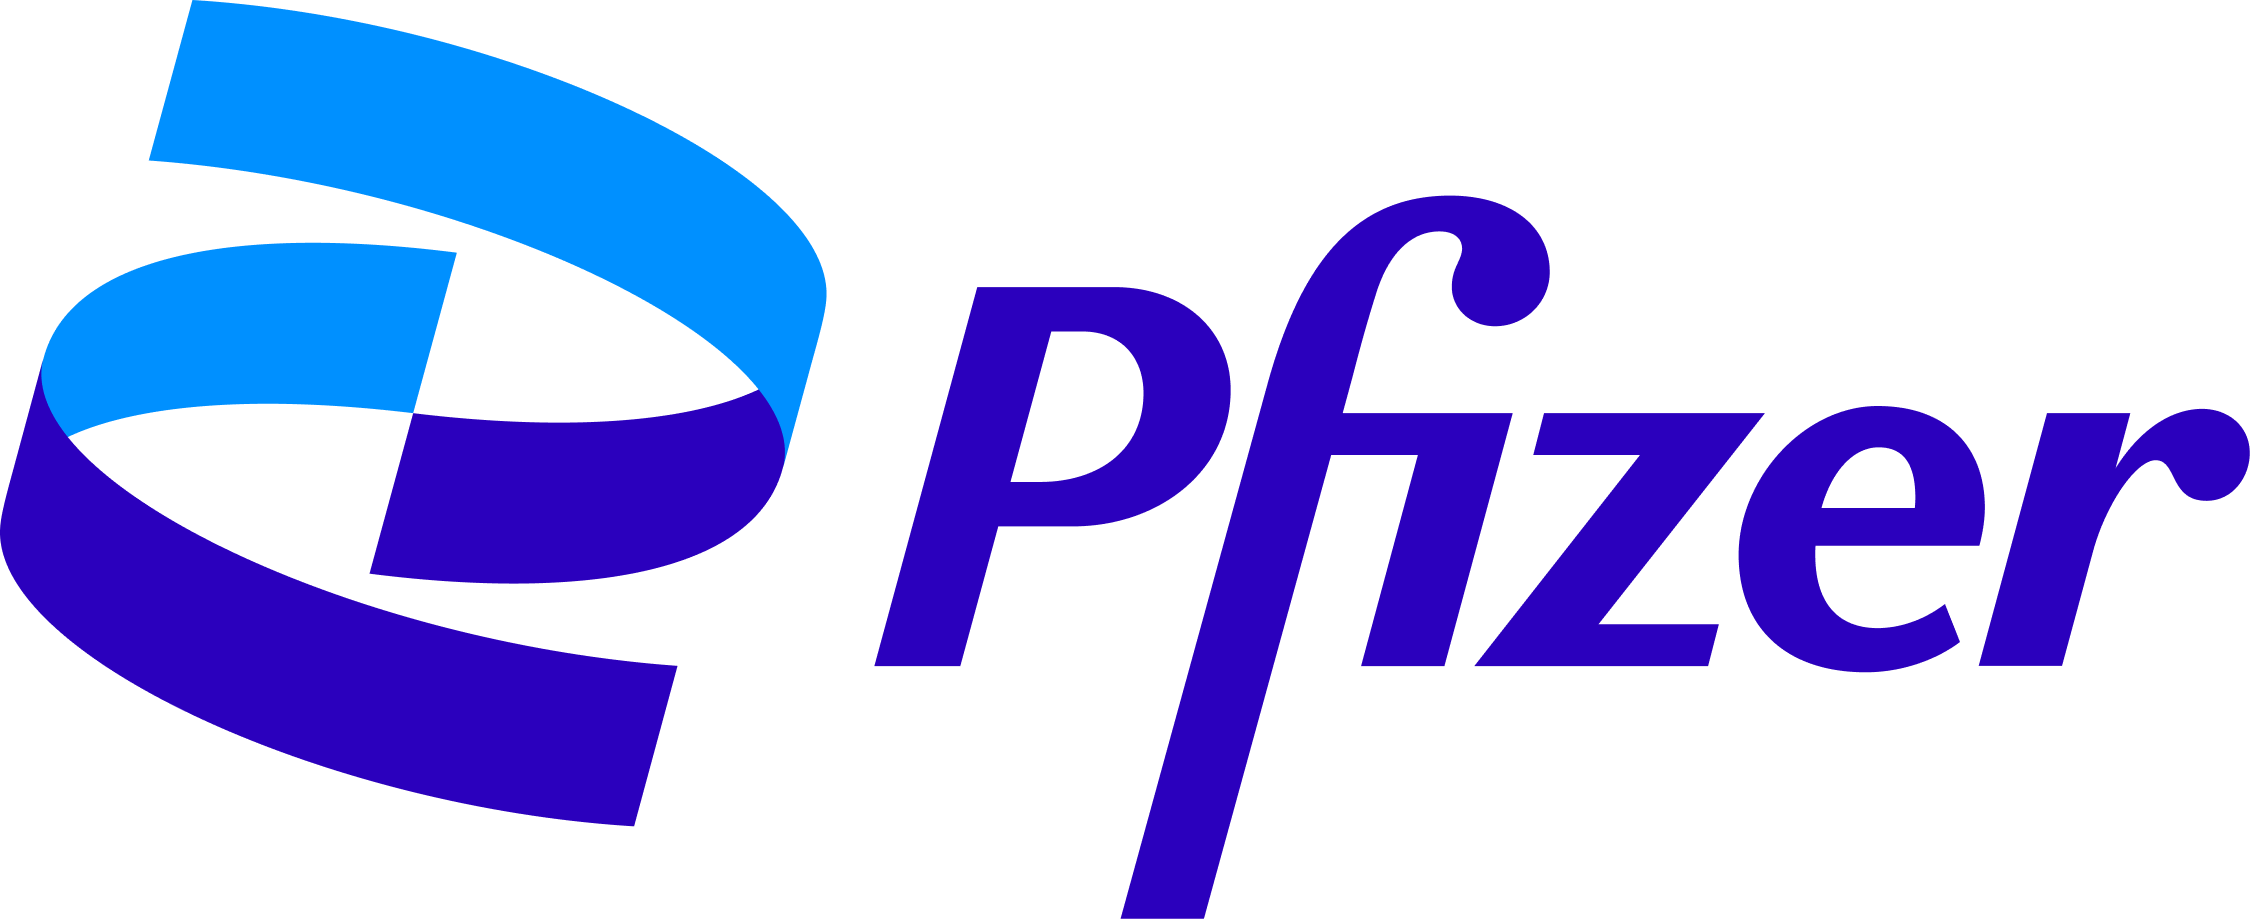 Pfizer Logo: Recognizable emblem of the Pfizer brand